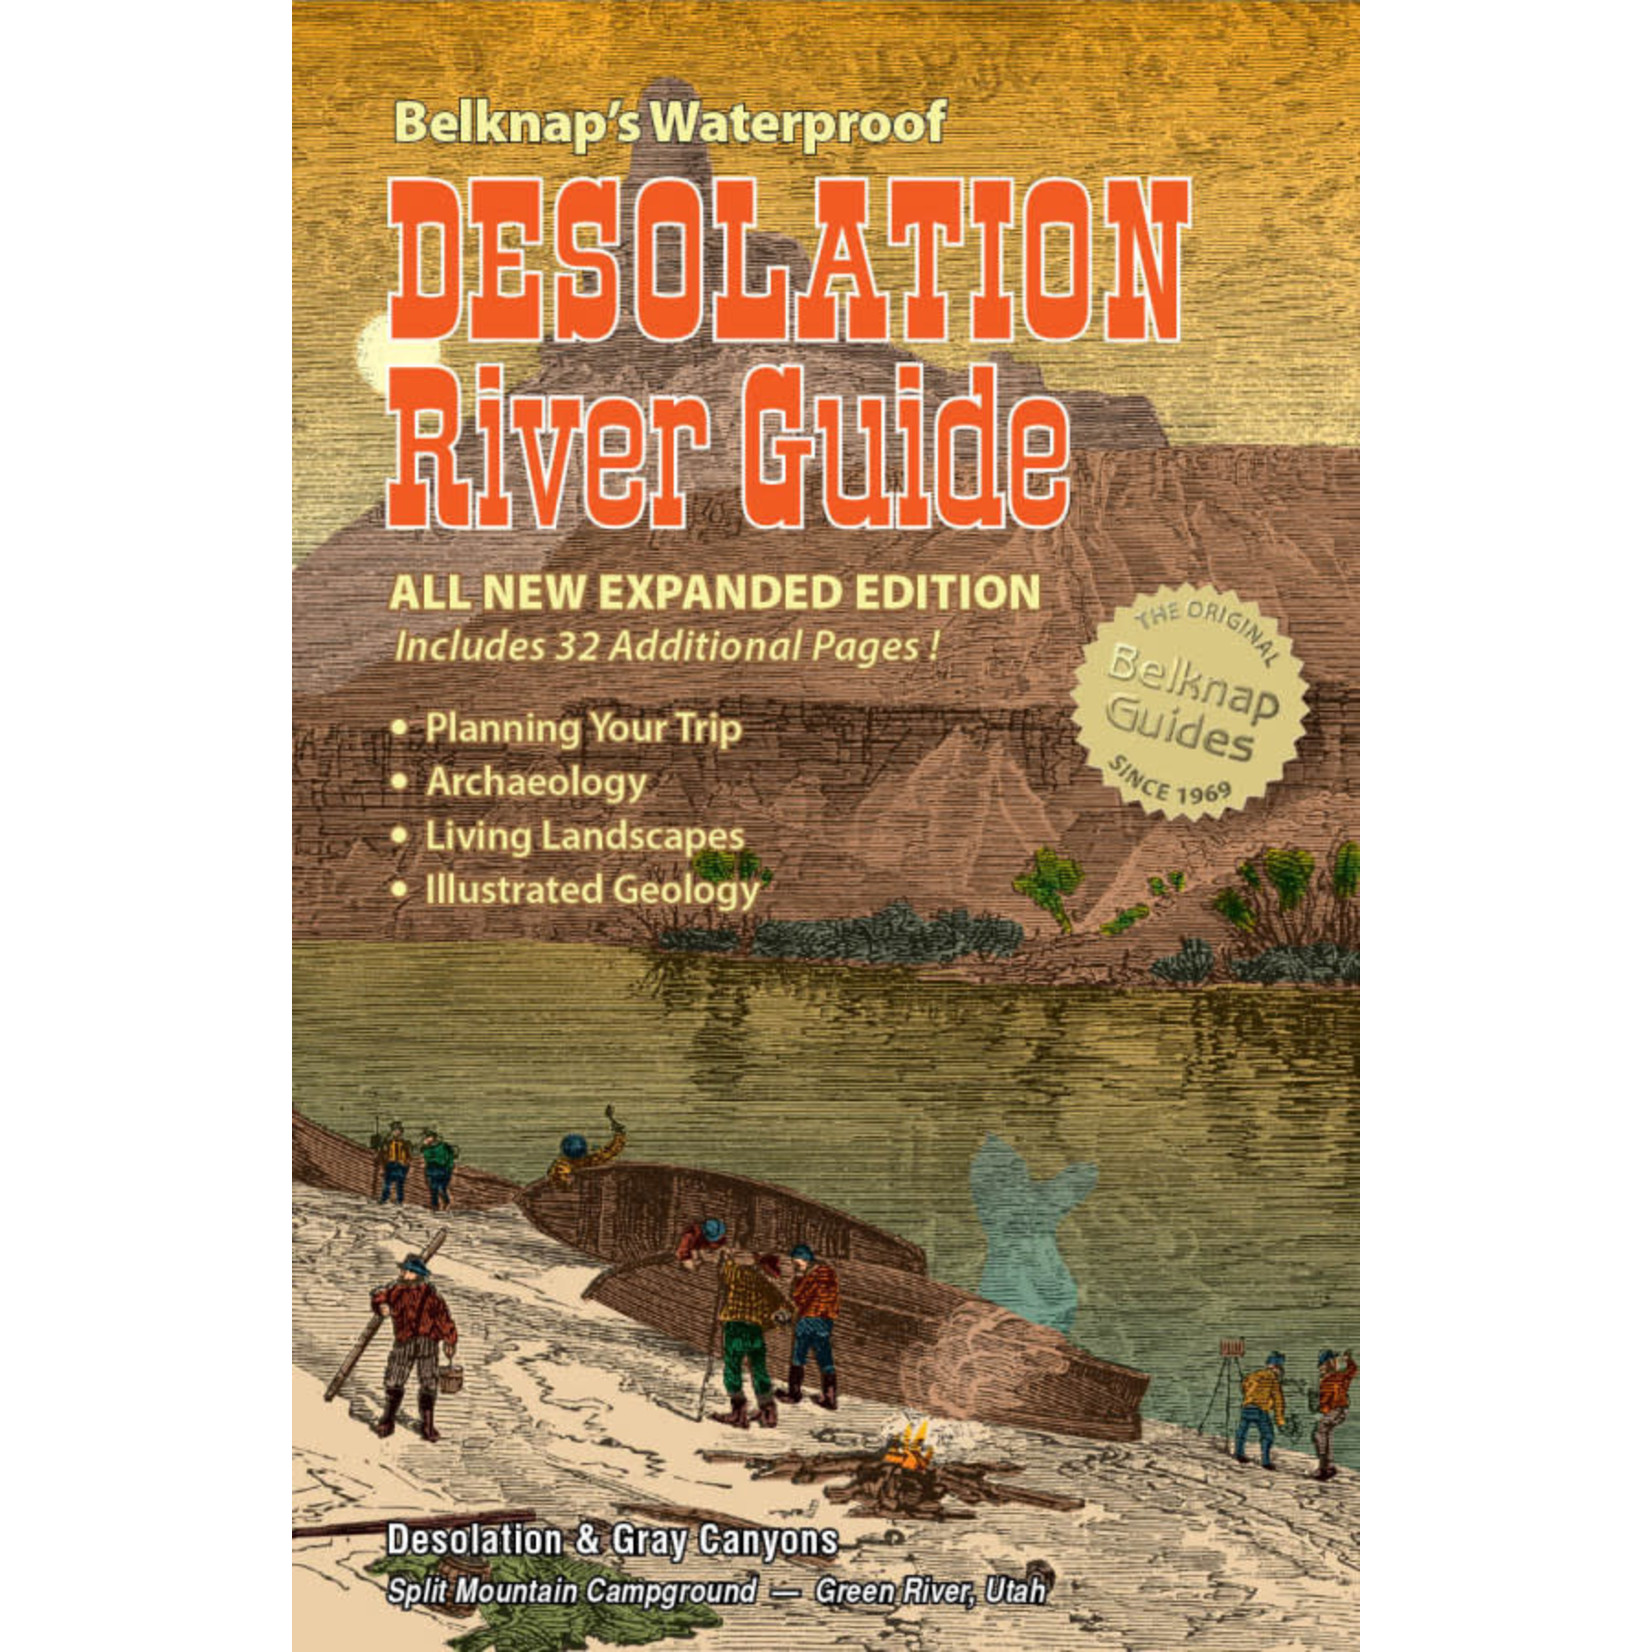 Belknap's Belknap's Waterproof Desolation River Guide